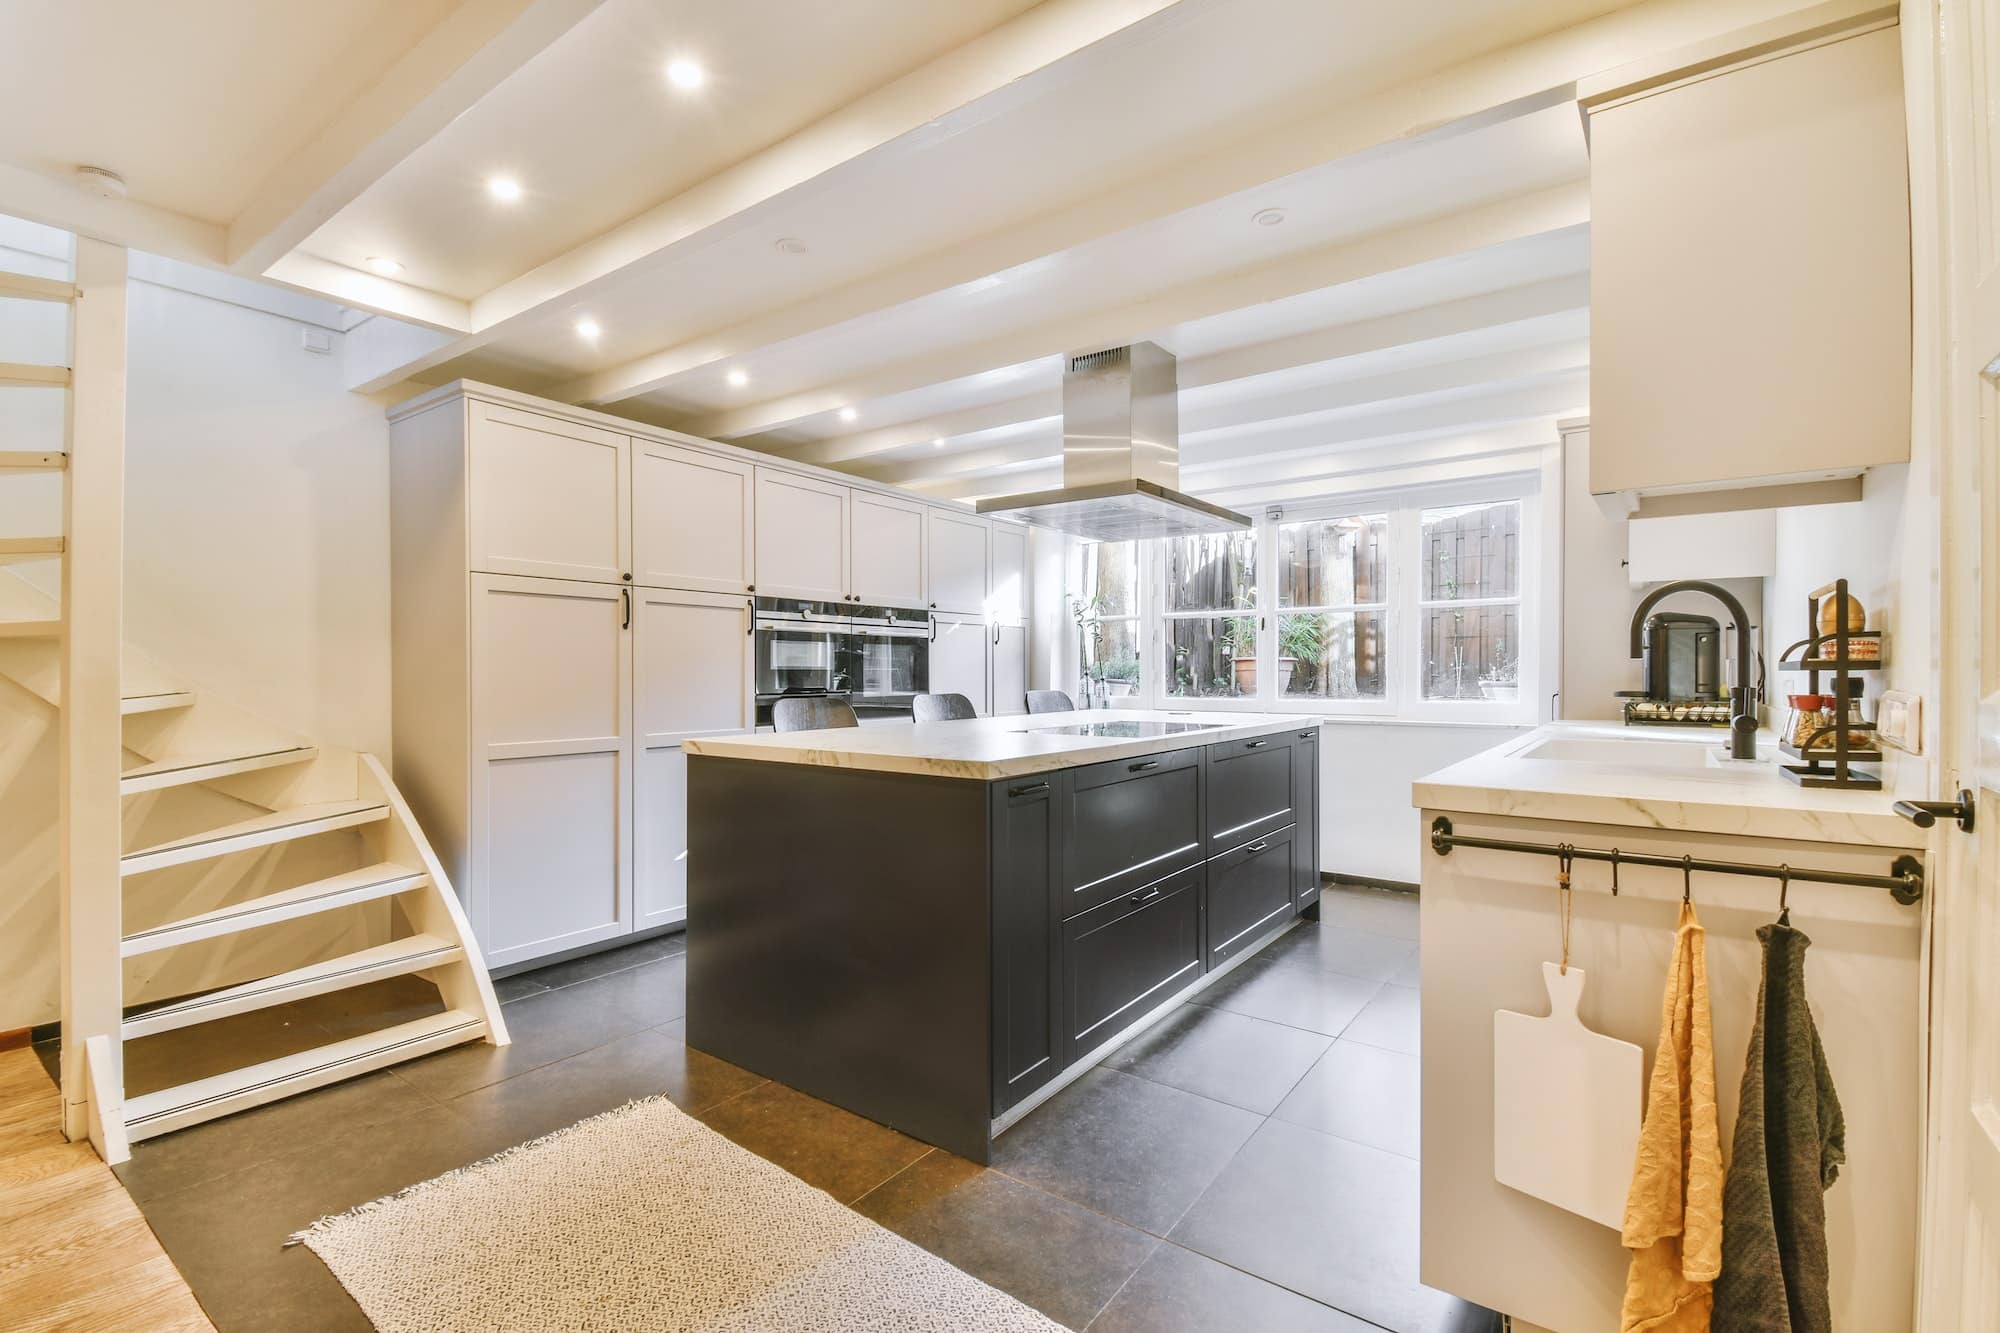 Modern luxury kitchen with island counter